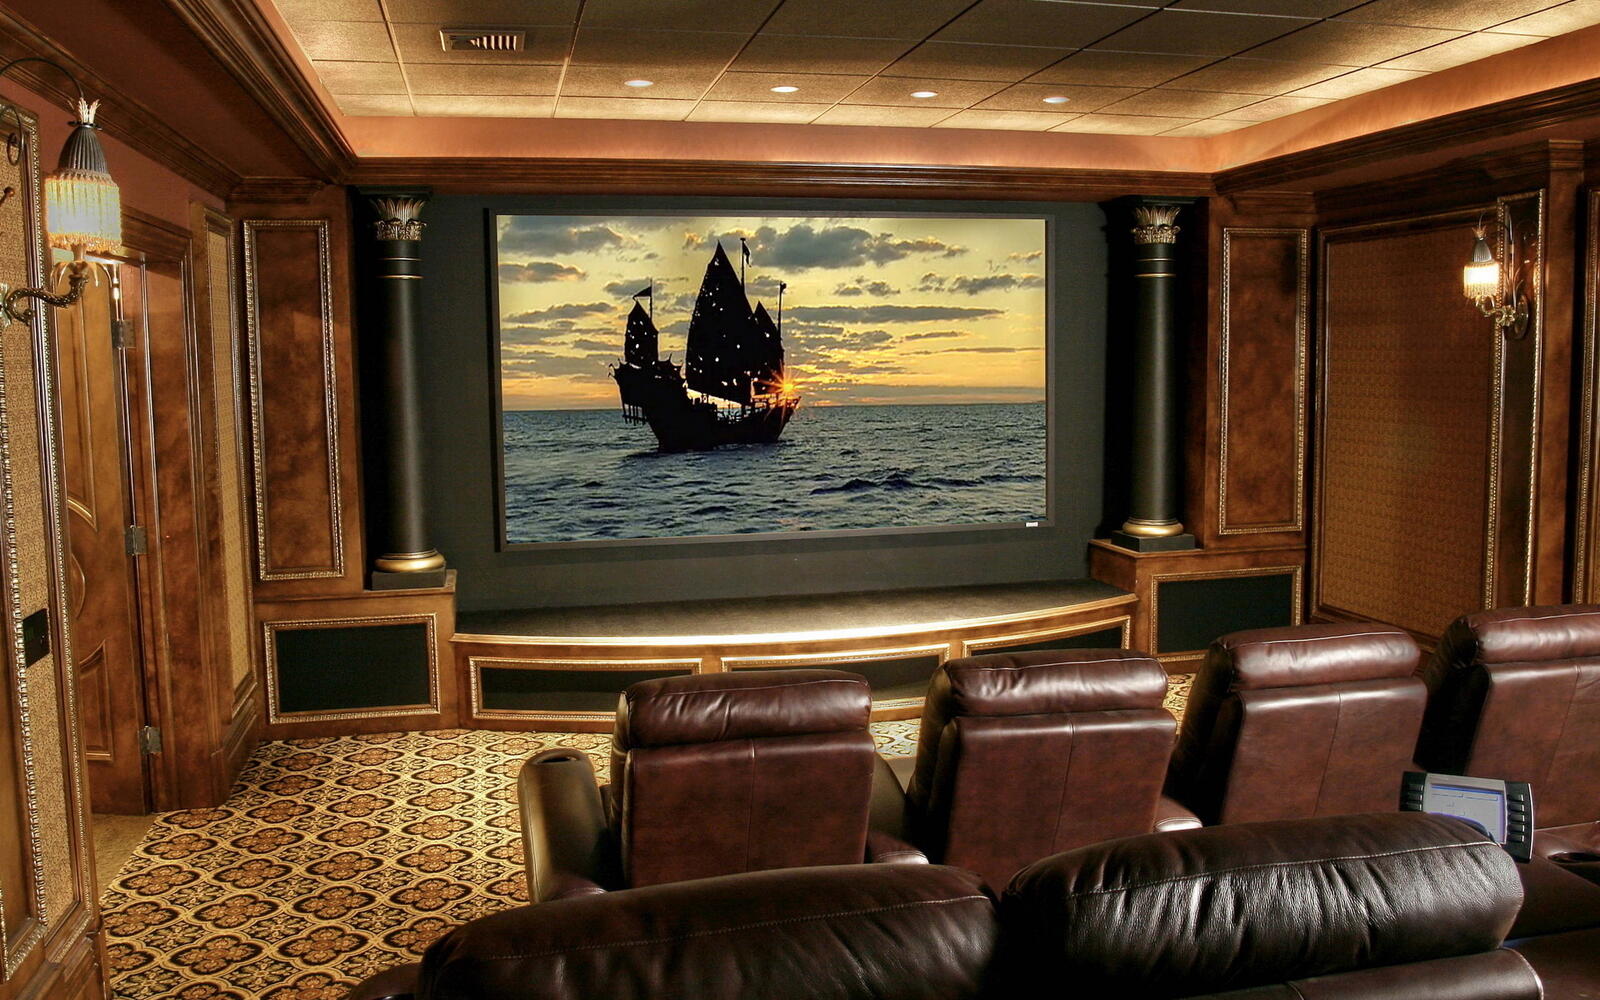 Wallpapers room hall cinema on the desktop